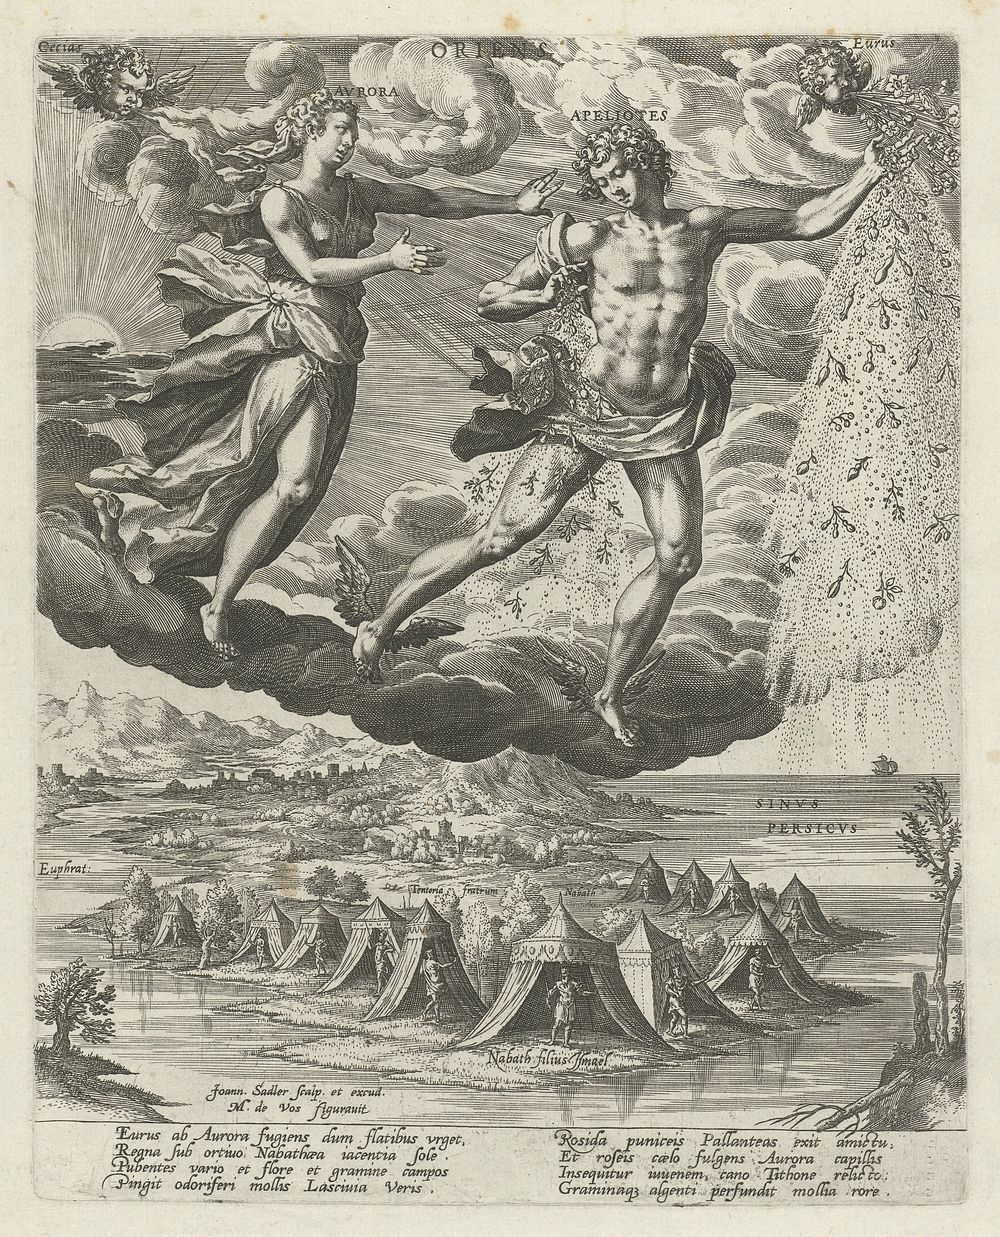 Oostenwind (1560 - 1600) by Johann Sadeler I, Maerten de Vos and Johann Sadeler I